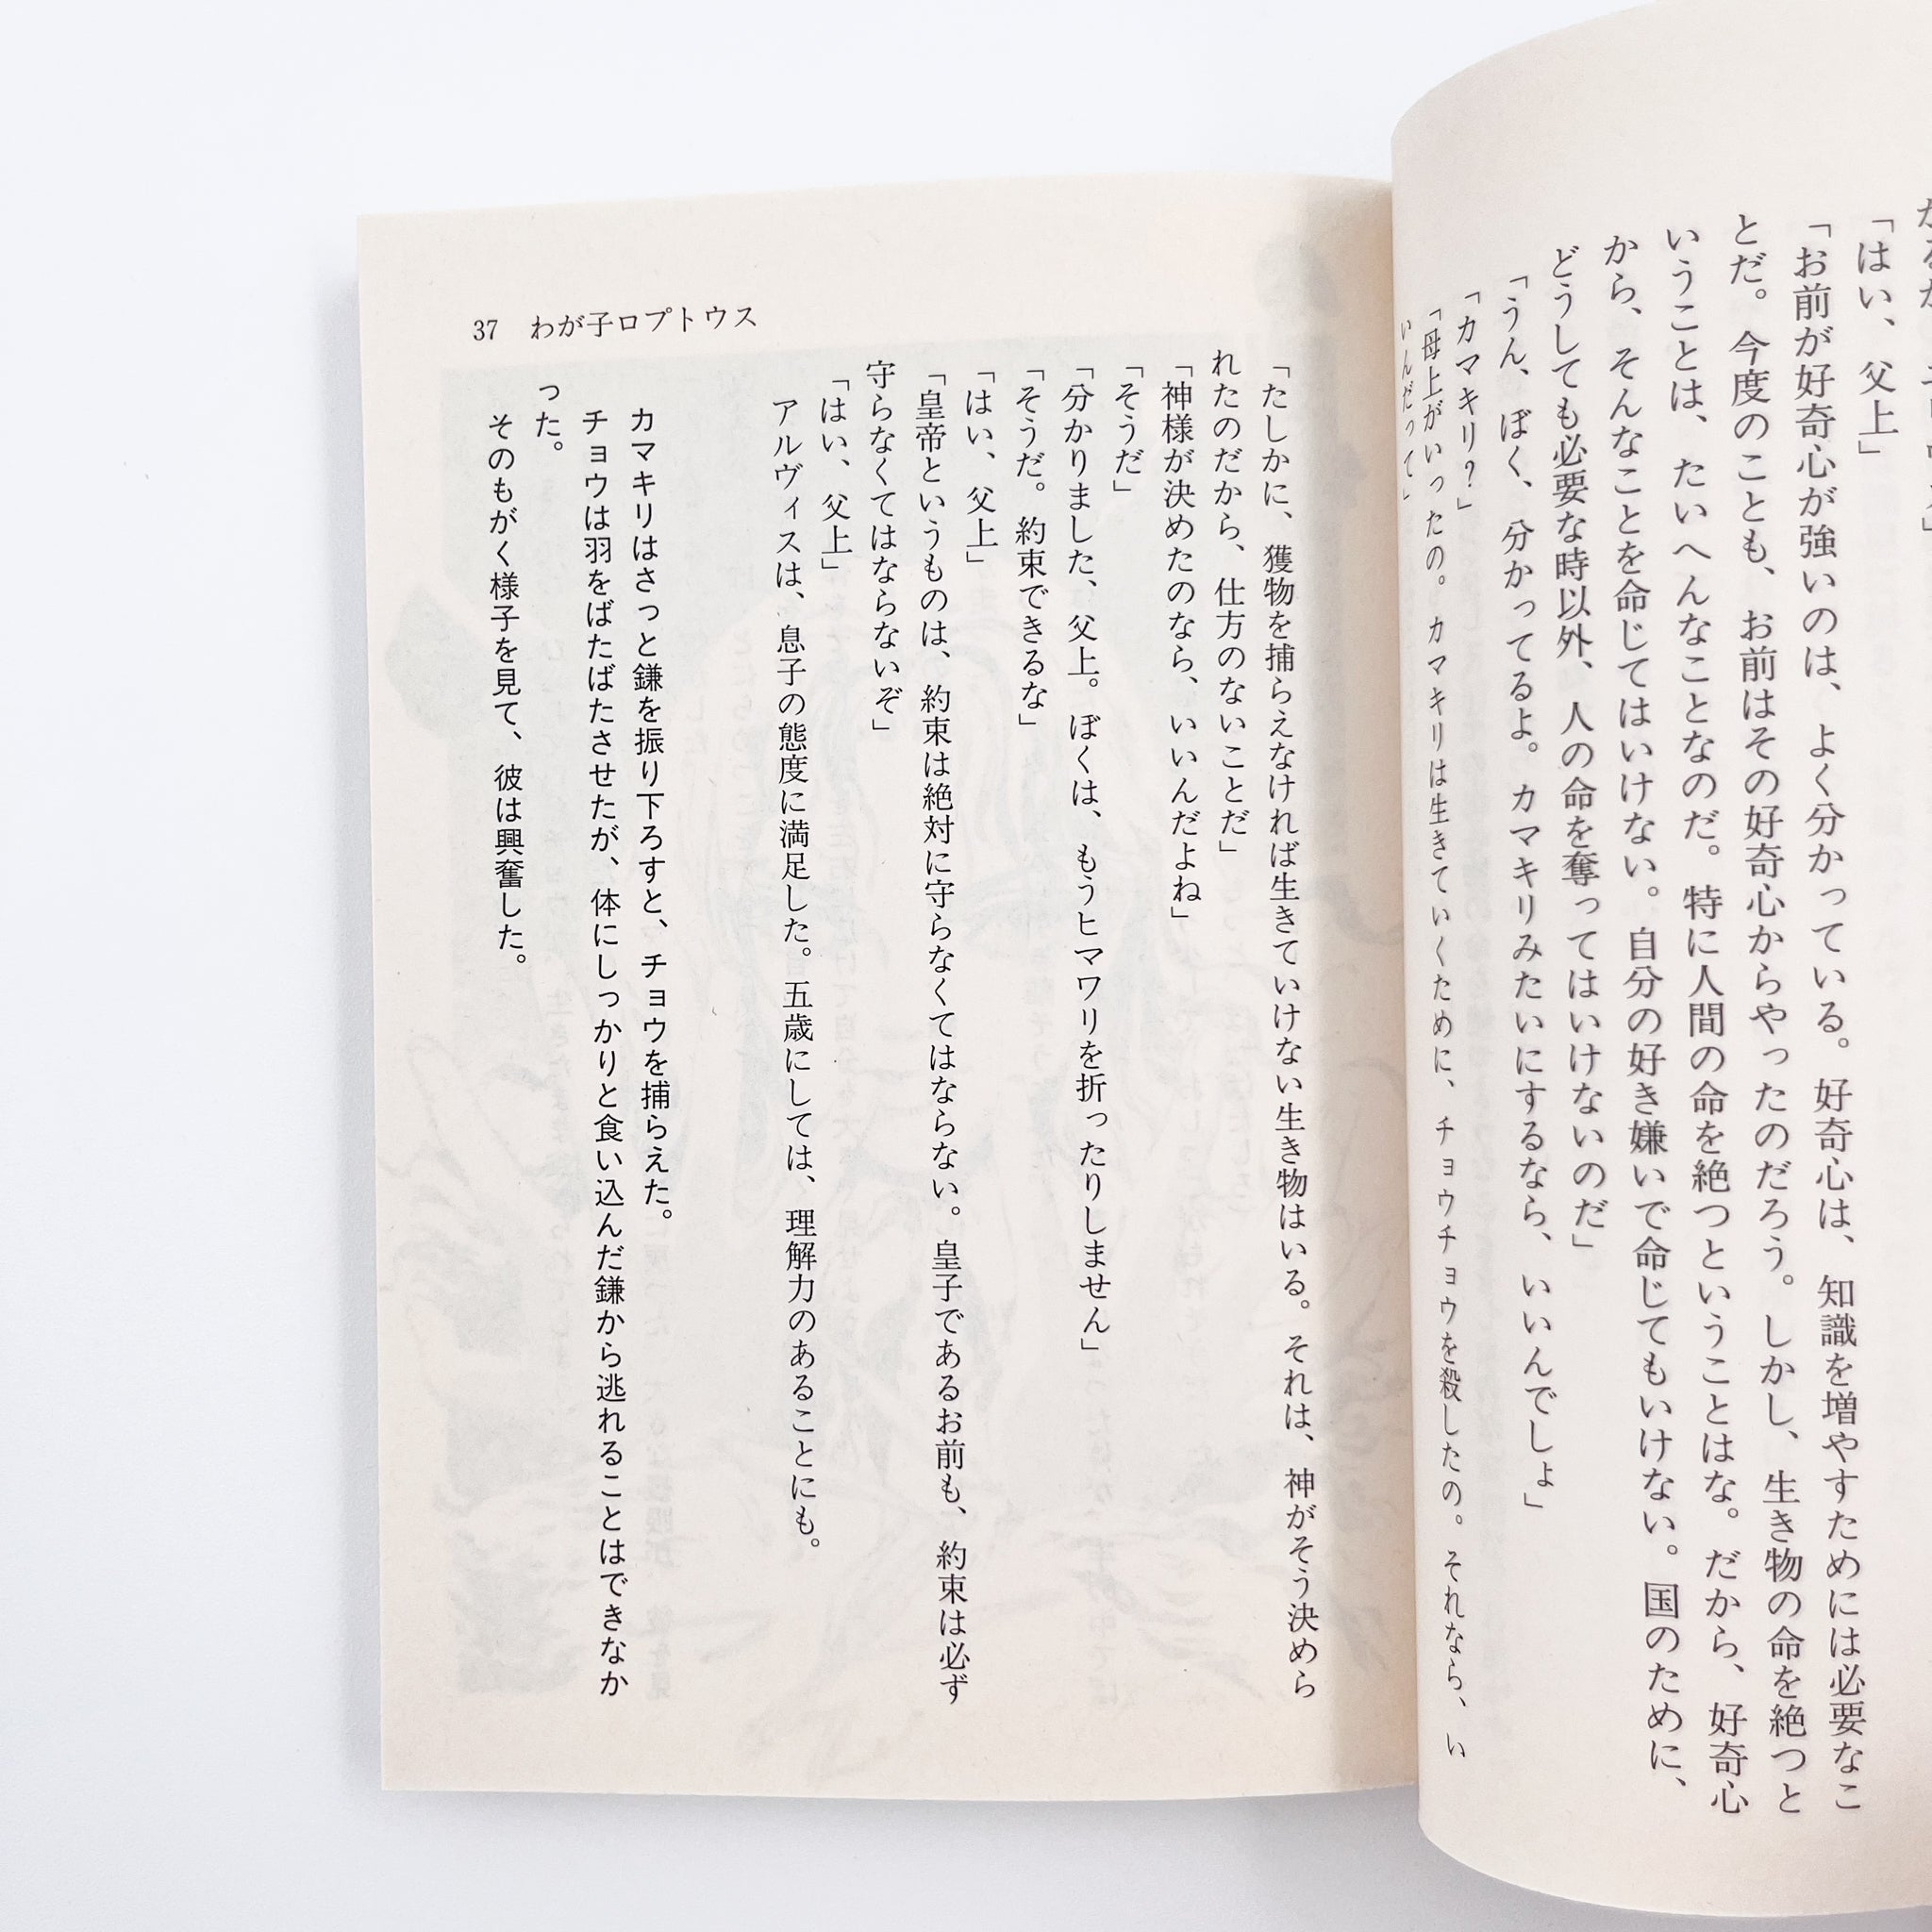 Fire Emblem: Genealogy of the Holy War - Mori to Mizuumi no Kuni light novel sample page